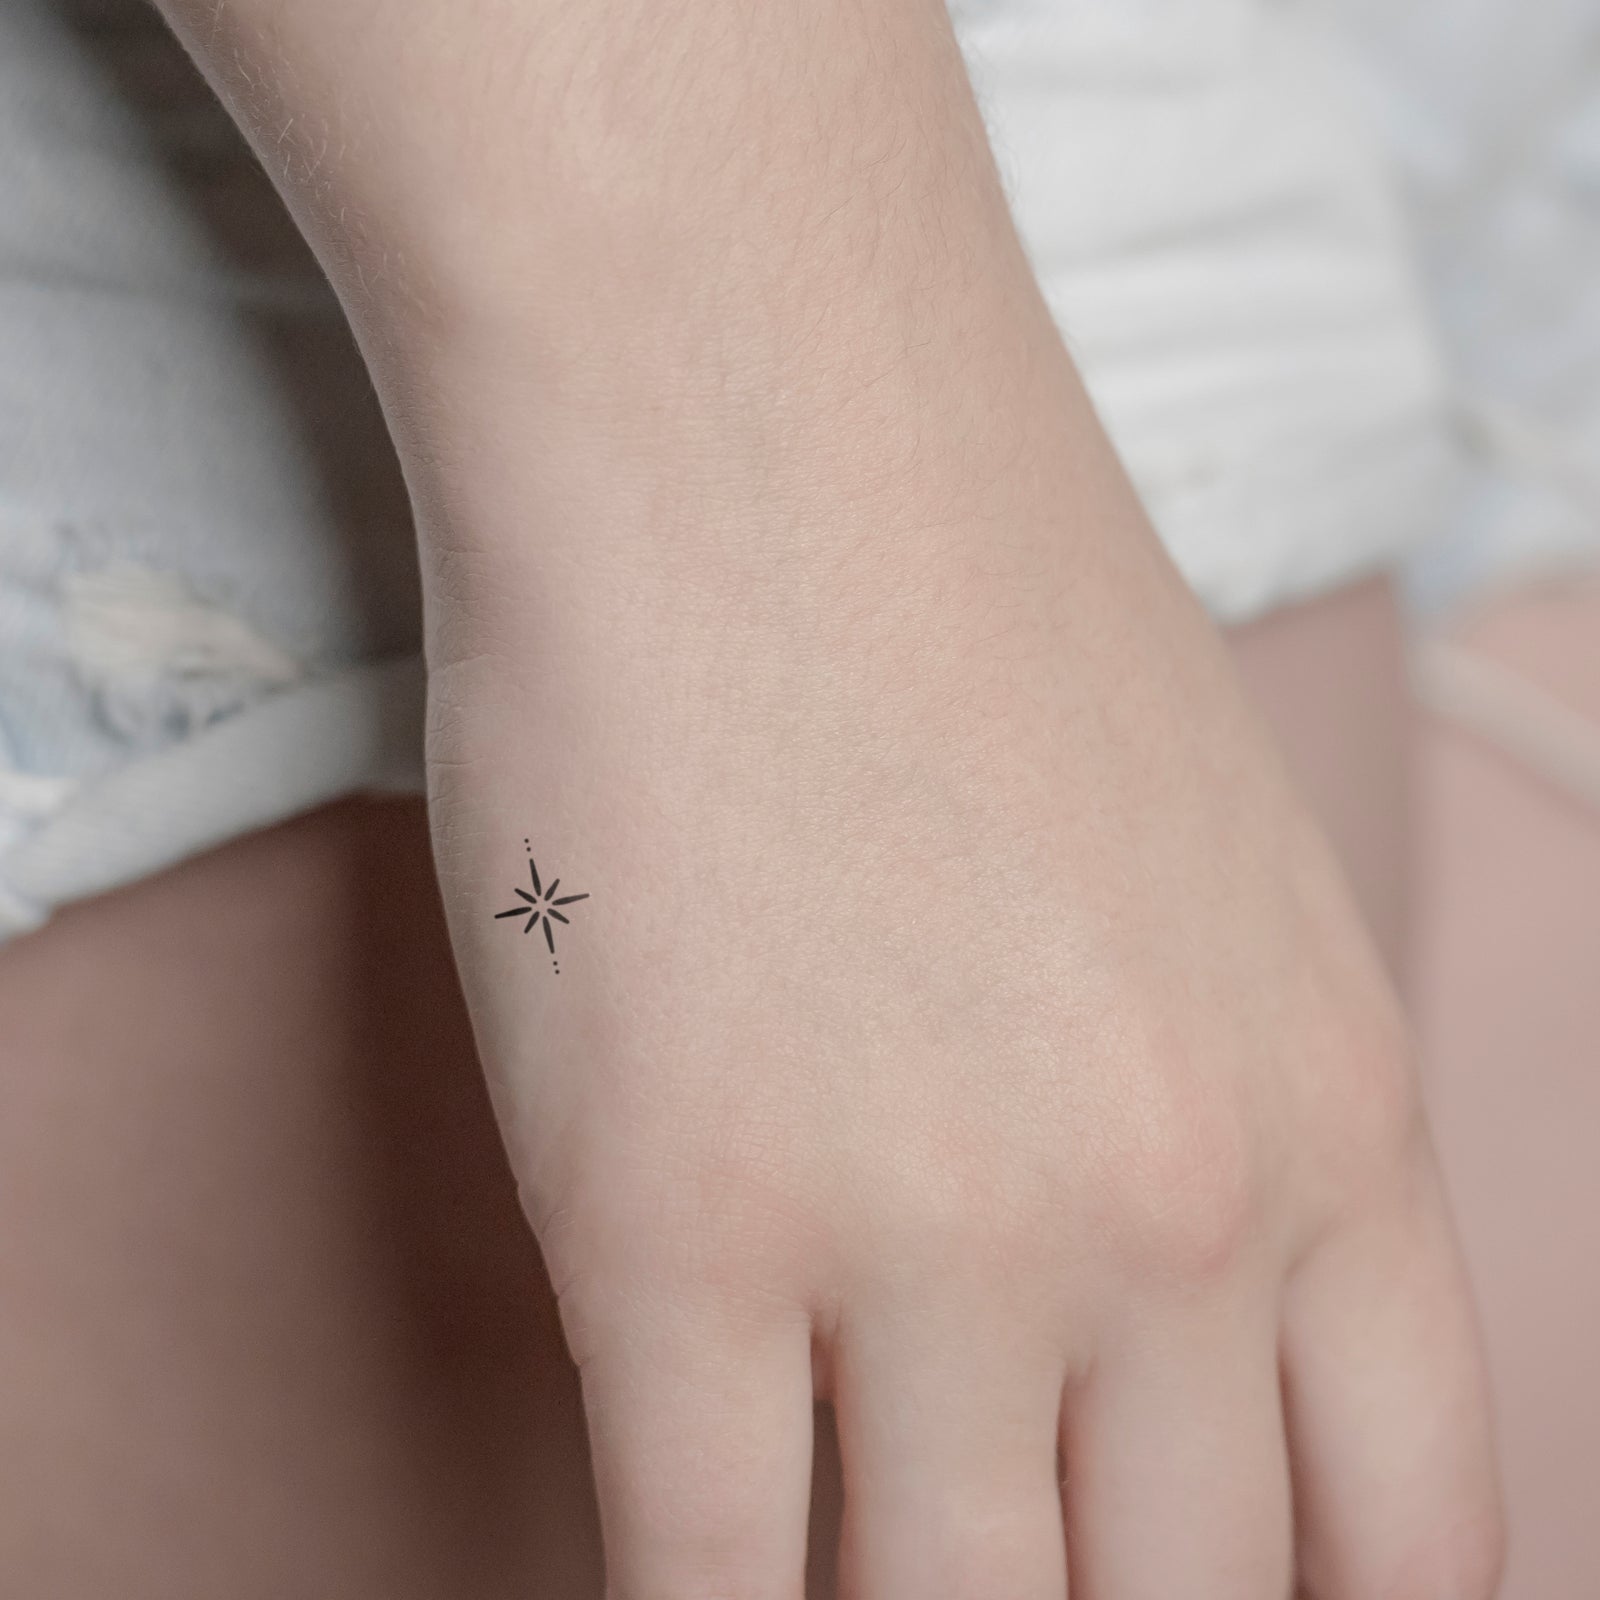 Wayfinder/Nautical star tattoo! : r/KingdomHearts